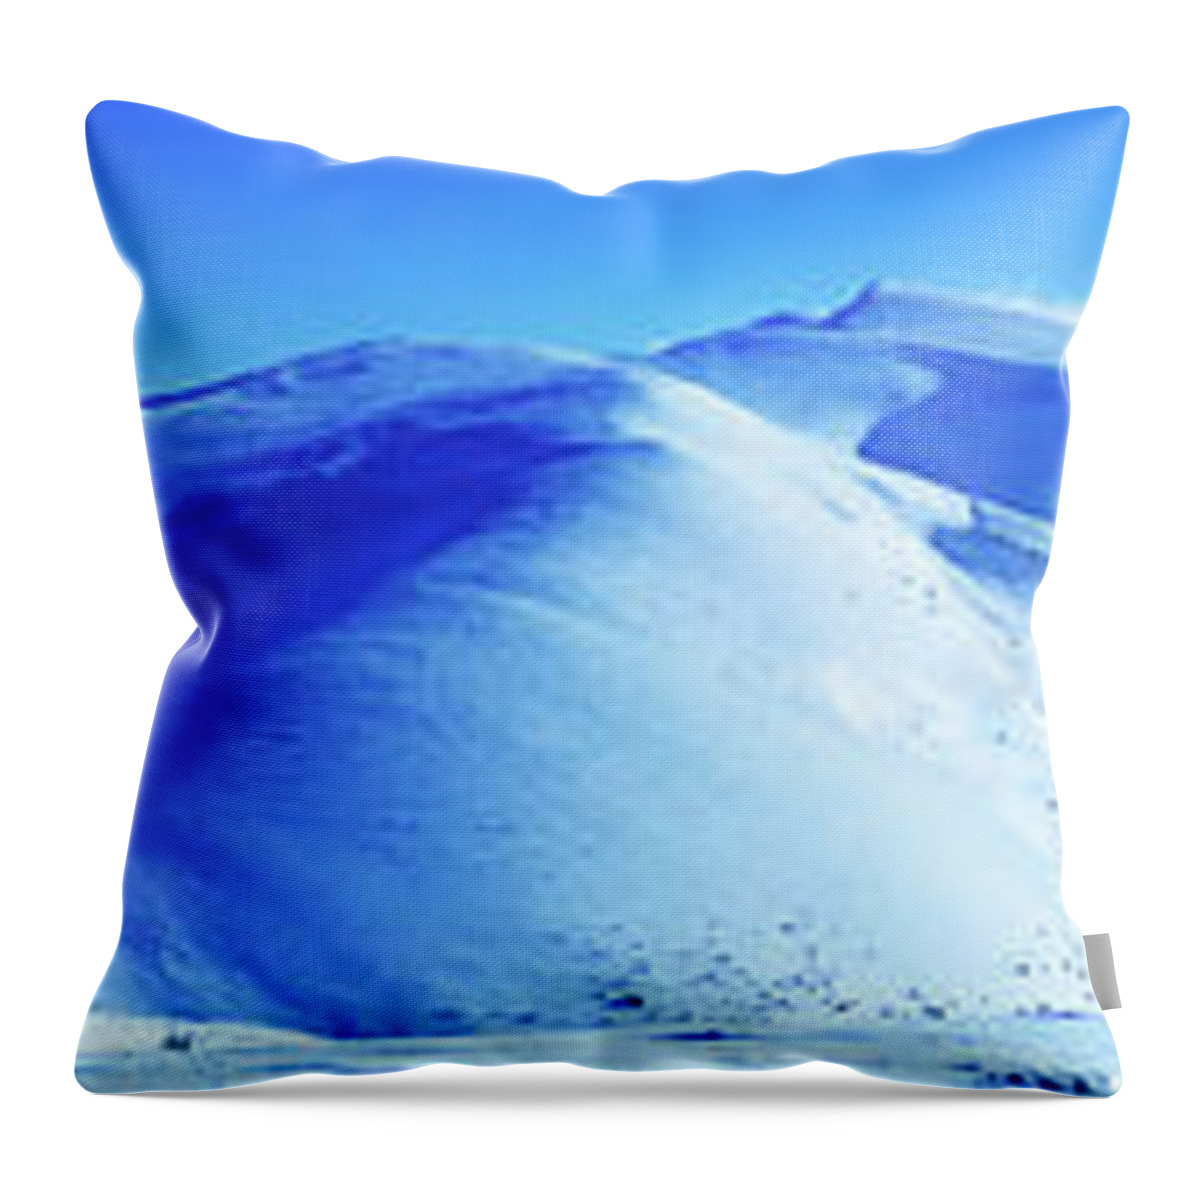 Cool Attitude Throw Pillow featuring the photograph Carpathian Mountains by Yourapechkin